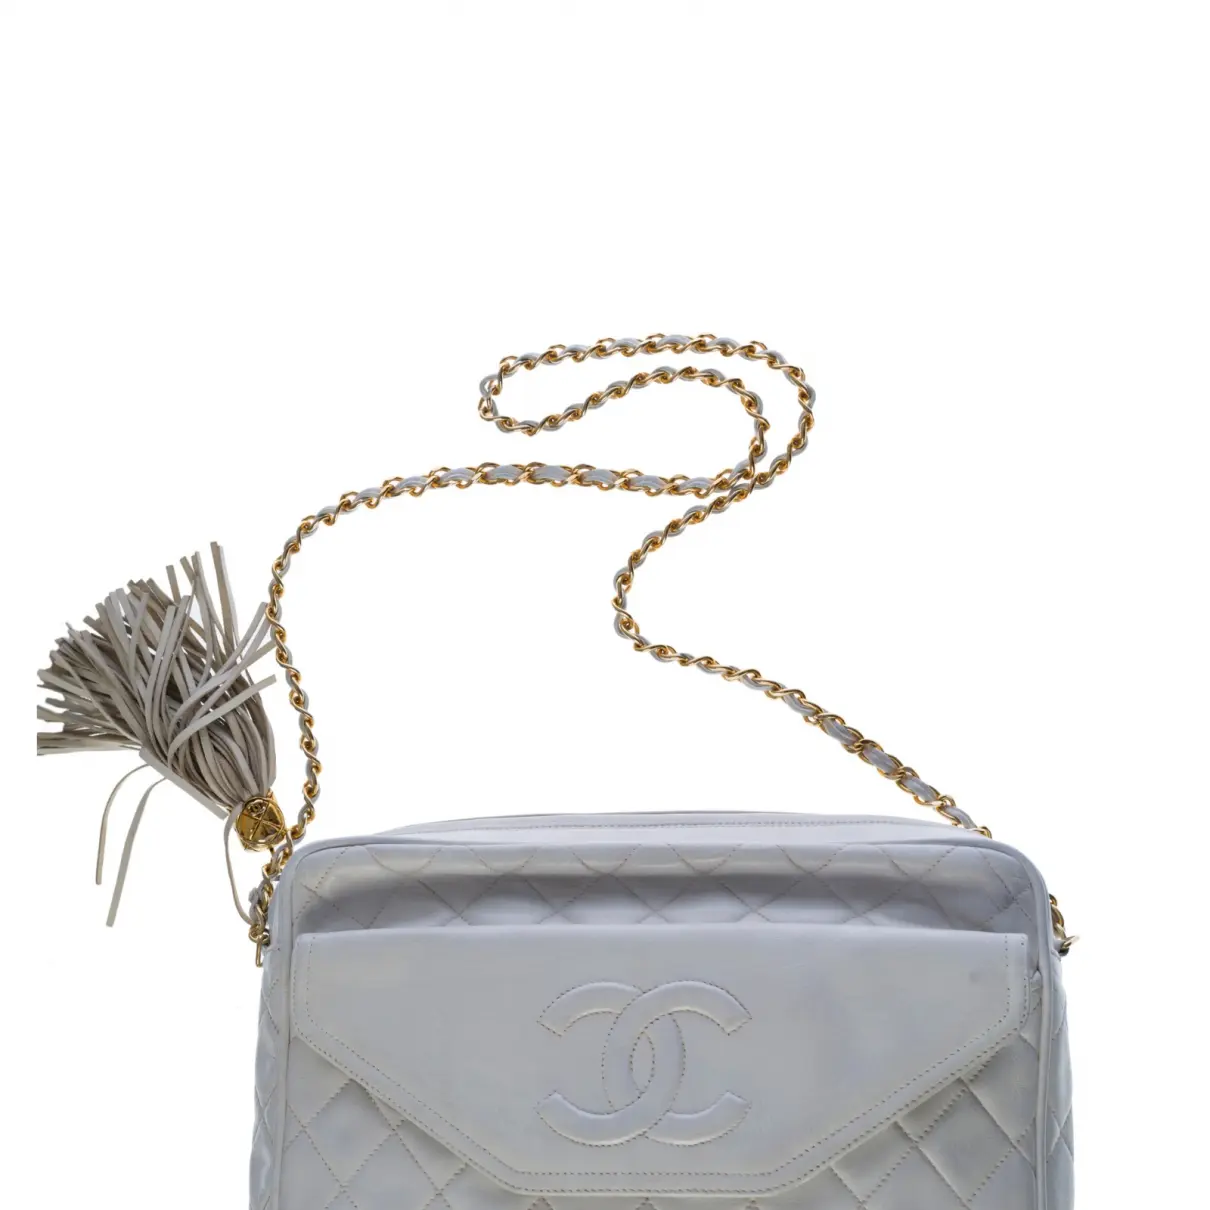 Buy Chanel Camera leather handbag online